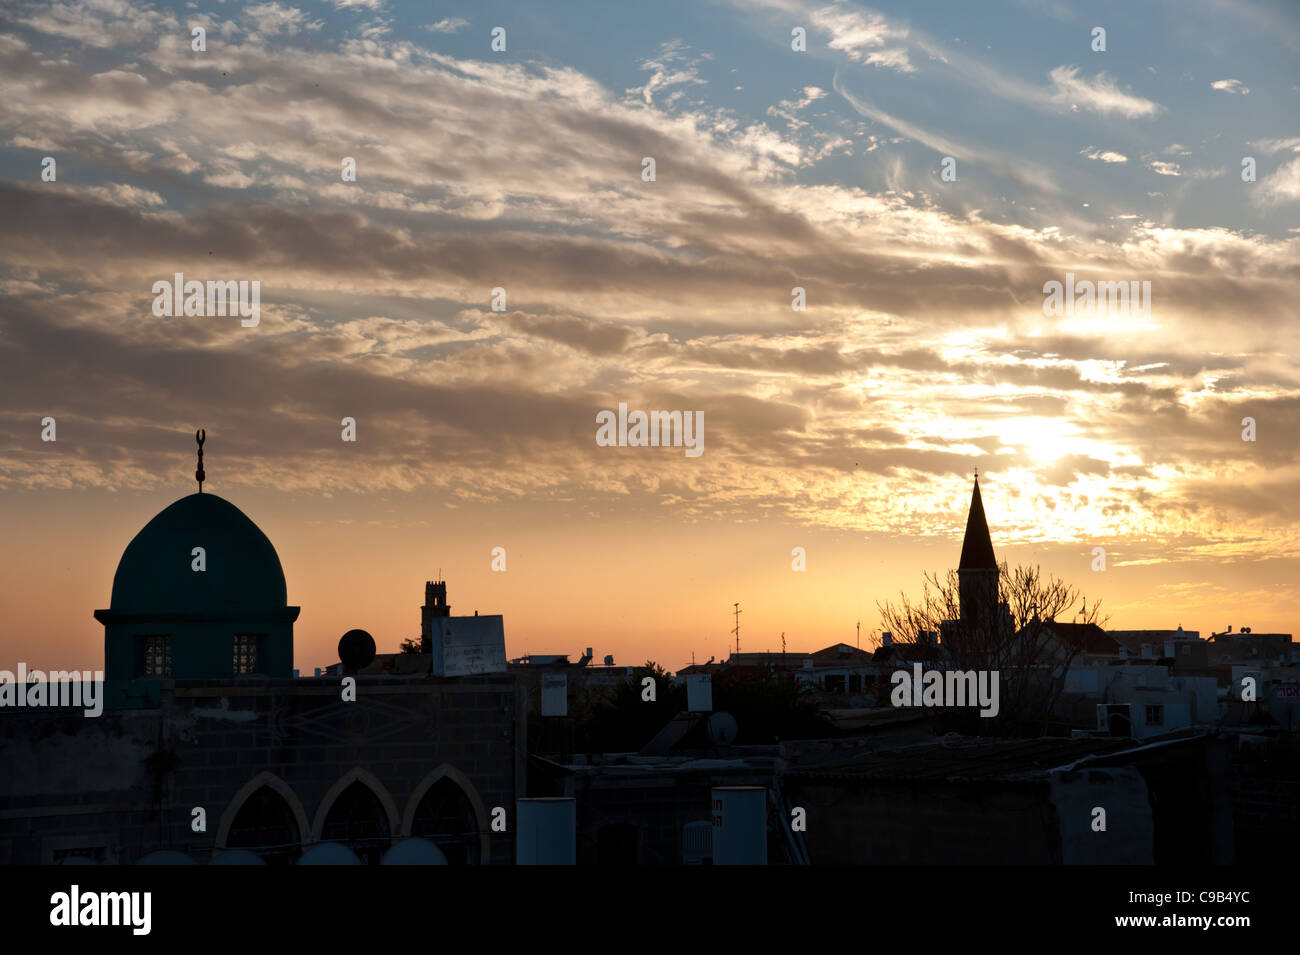 Türme, Kuppeln und Minarette Puncutate Akko (Acre), Israel, Skyline bei Sonnenuntergang. Stockfoto